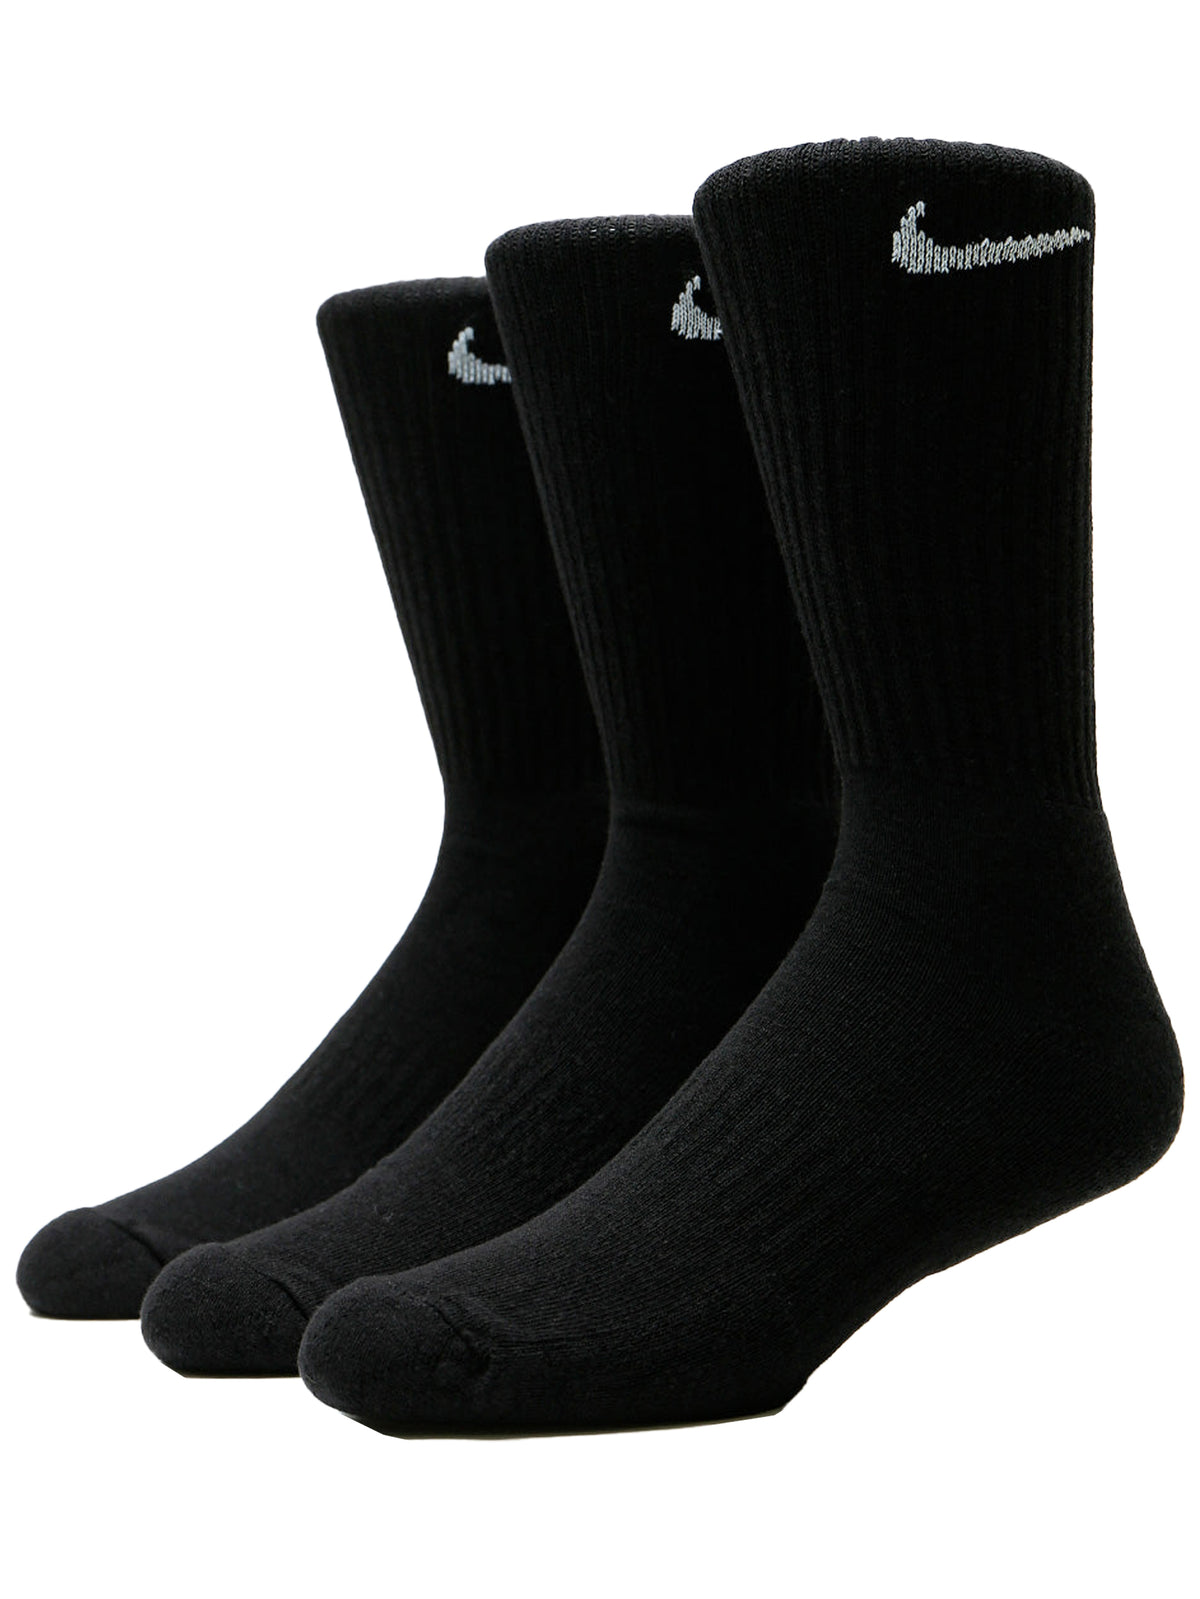 Nike Socks Sports Mens 3 Pairs Cotton Rich Designer Soft Crew Sock Size 8-14.5 RAWDENIM RAWDENIM